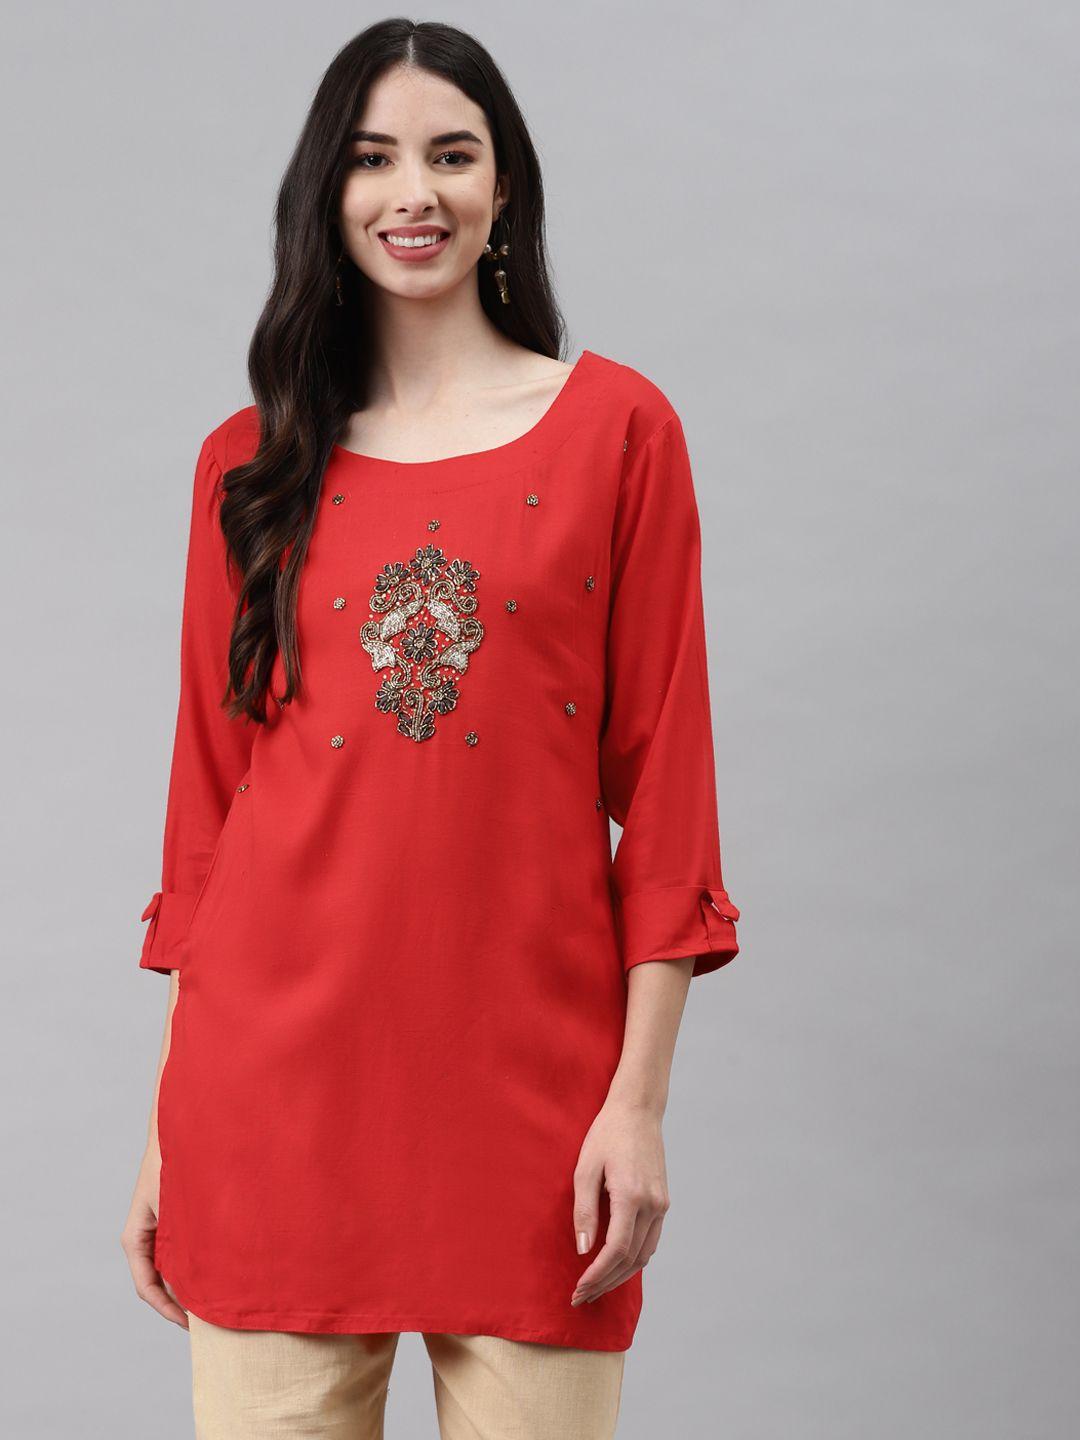 highlight fashion export red embellished regular top